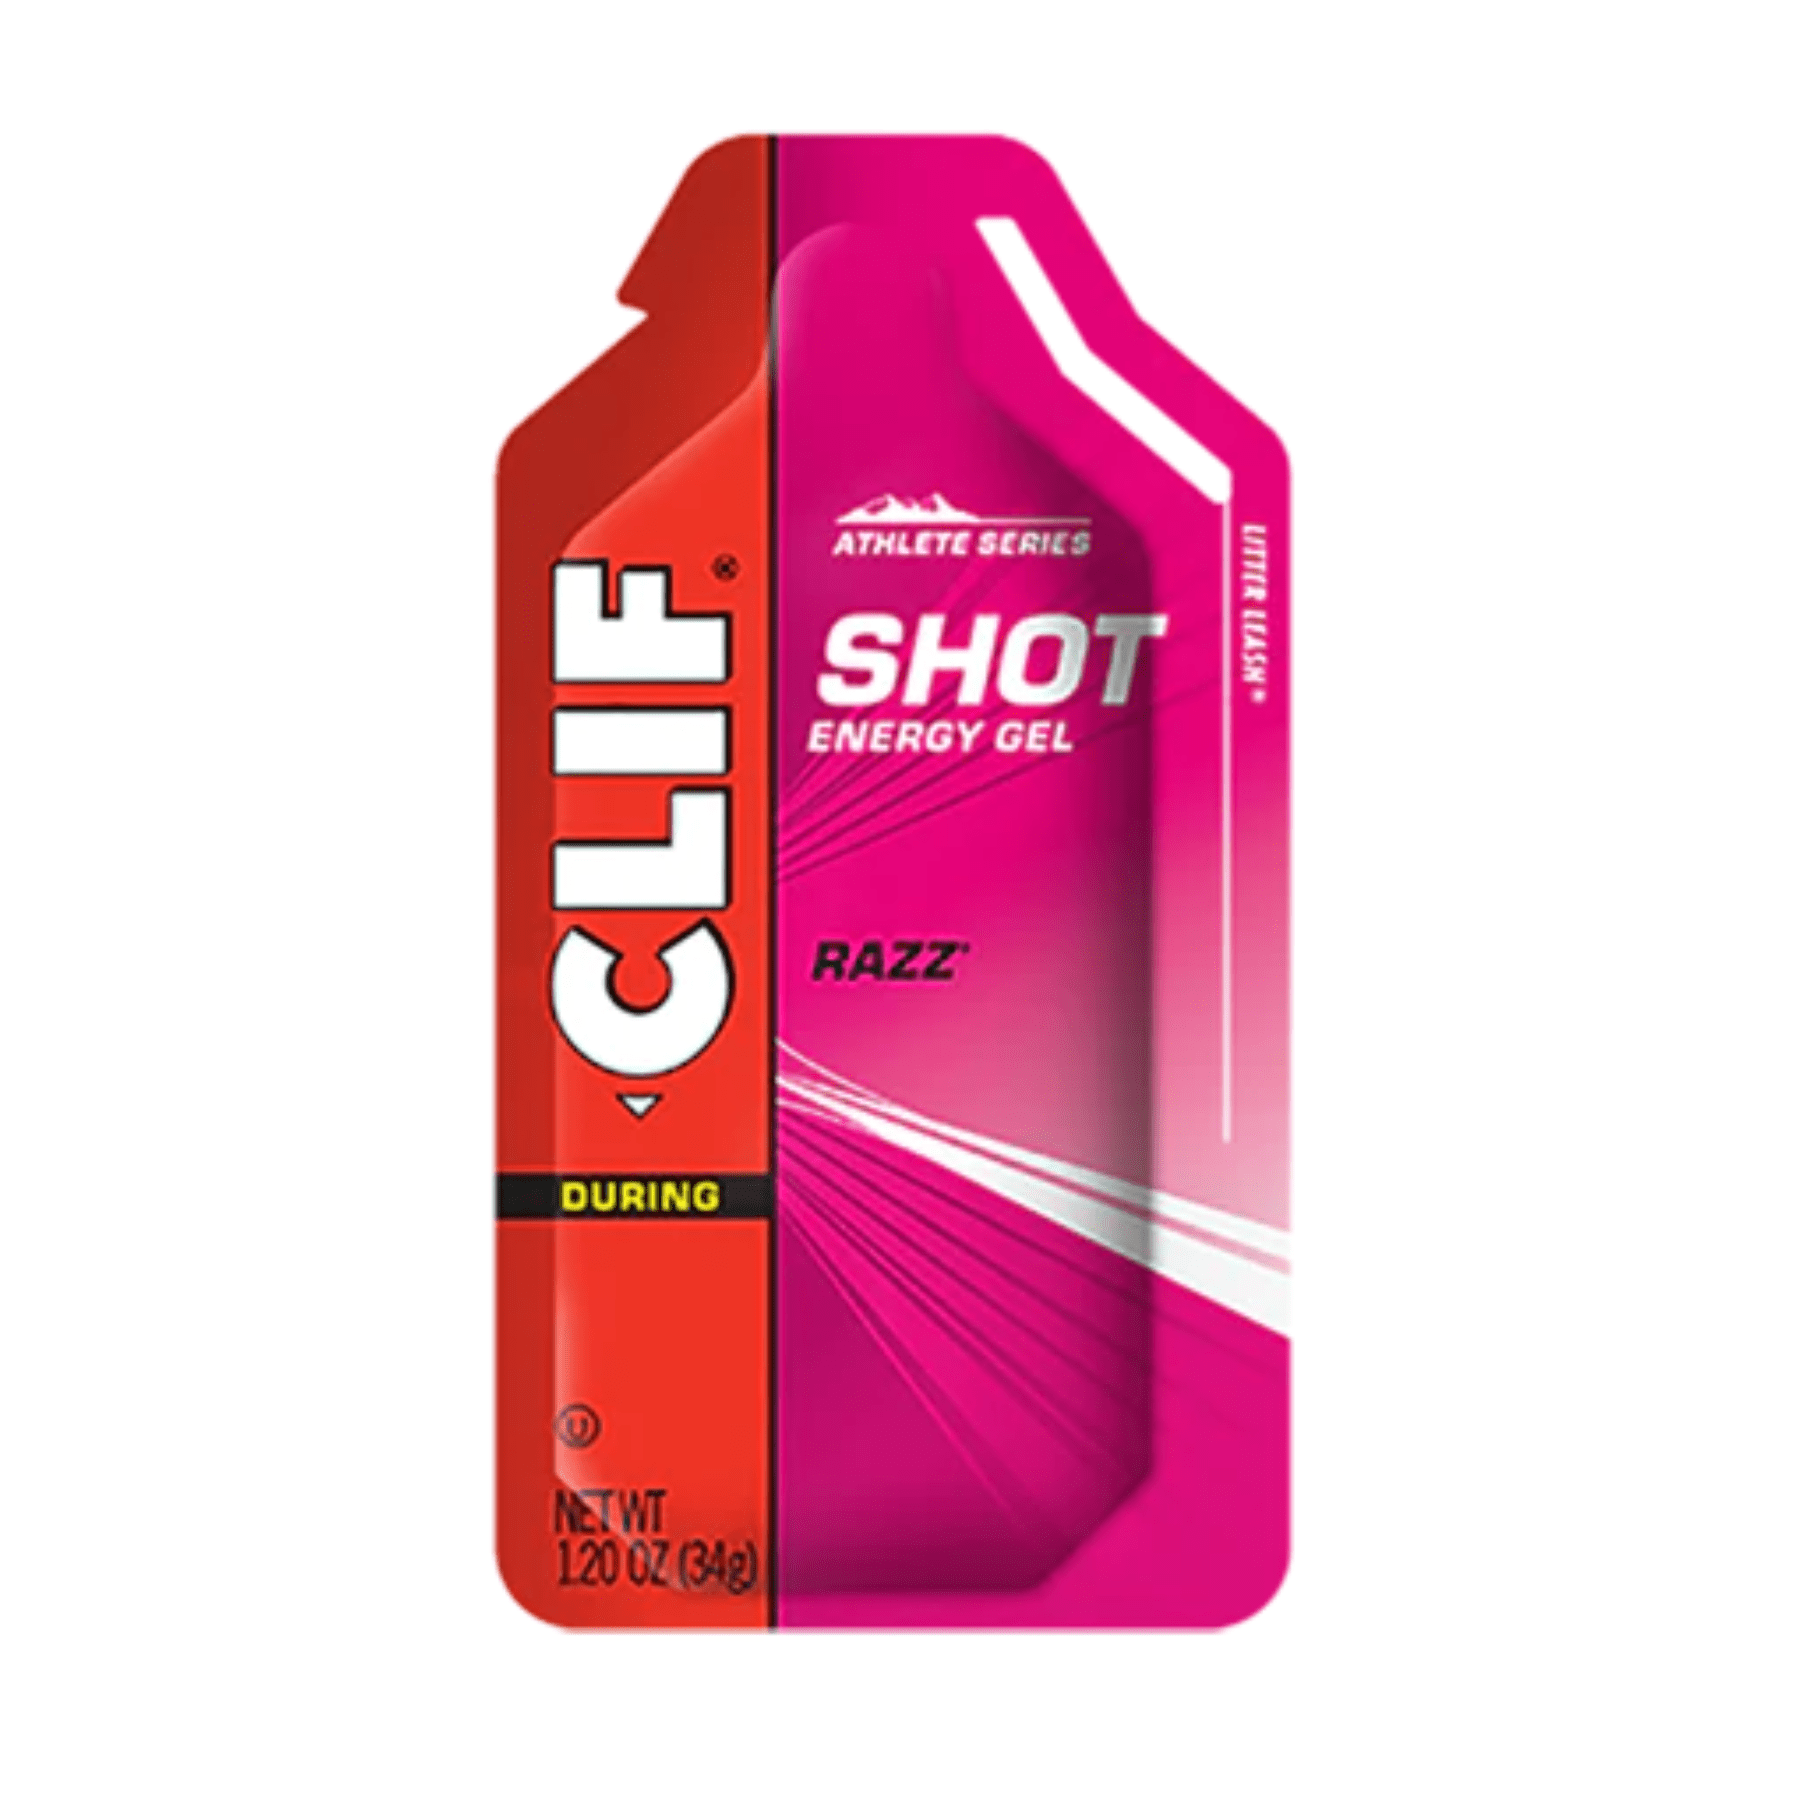 clif Energy Gel 1 / Razz SHOT Energy Gel CLIF641